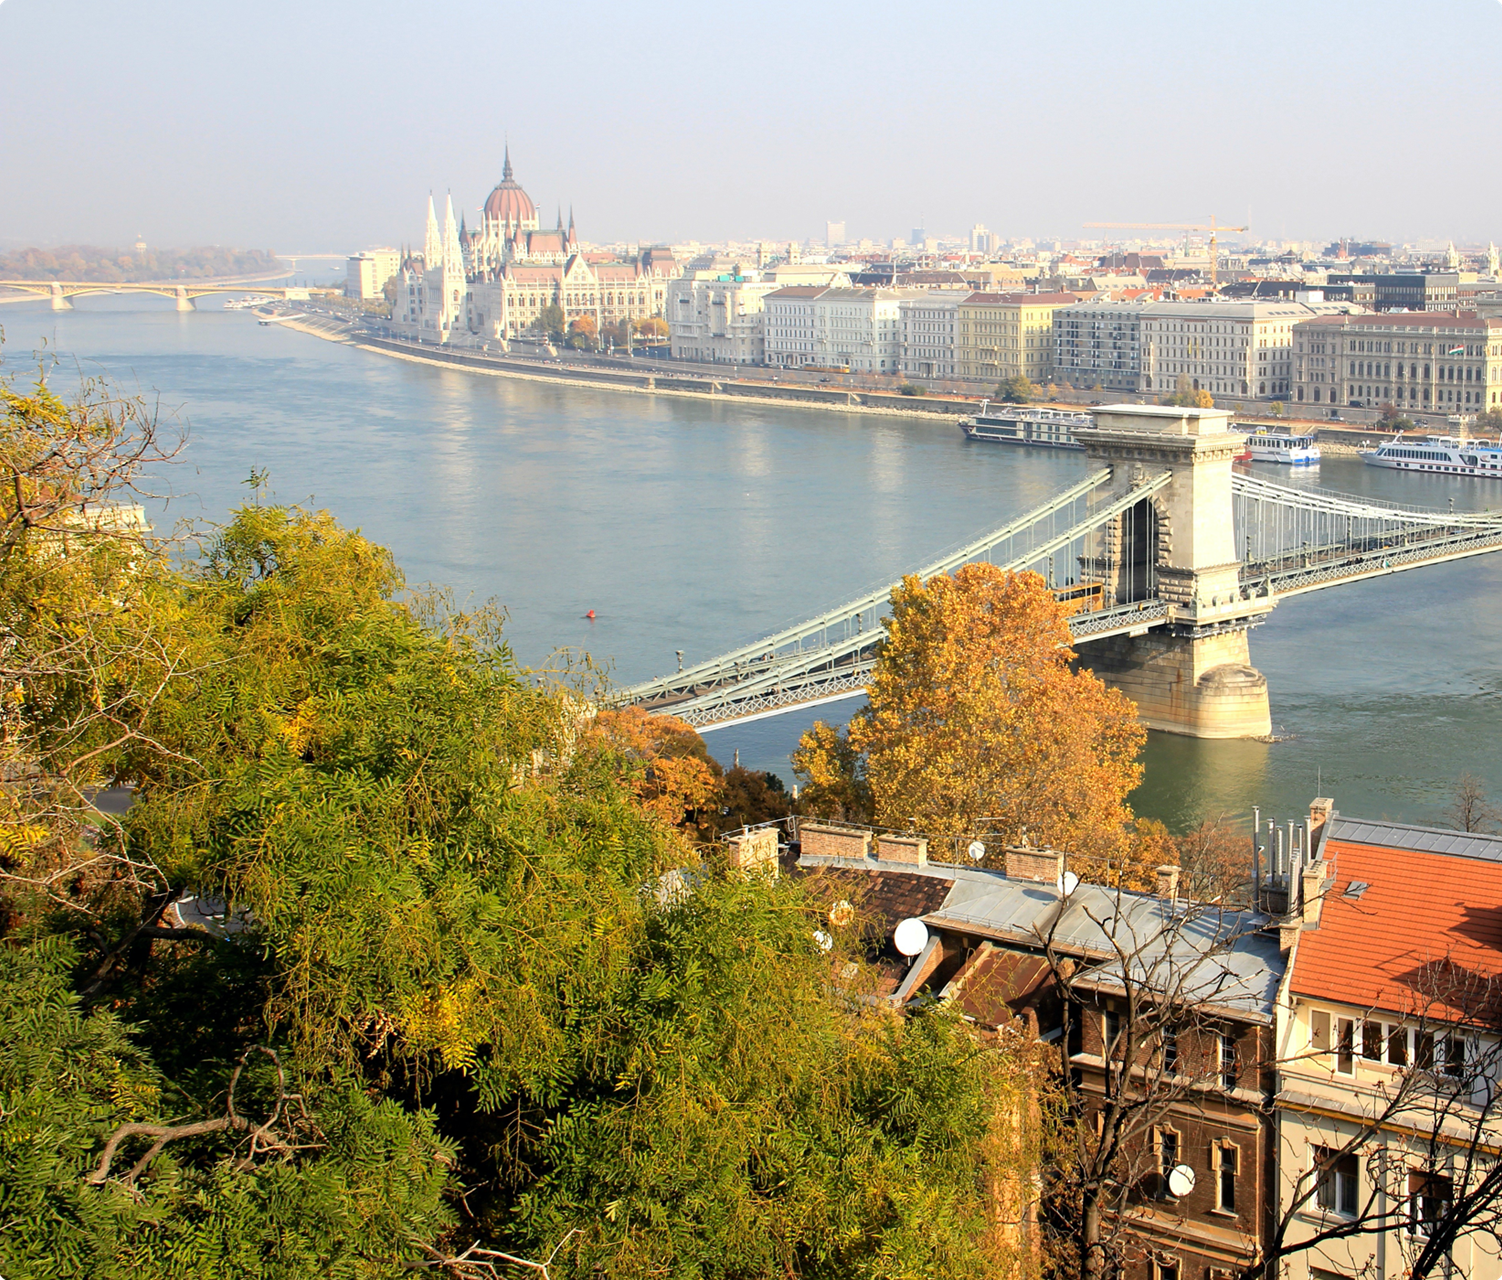  Budapest, Hungary - kennyleahmanphotography™ 2019